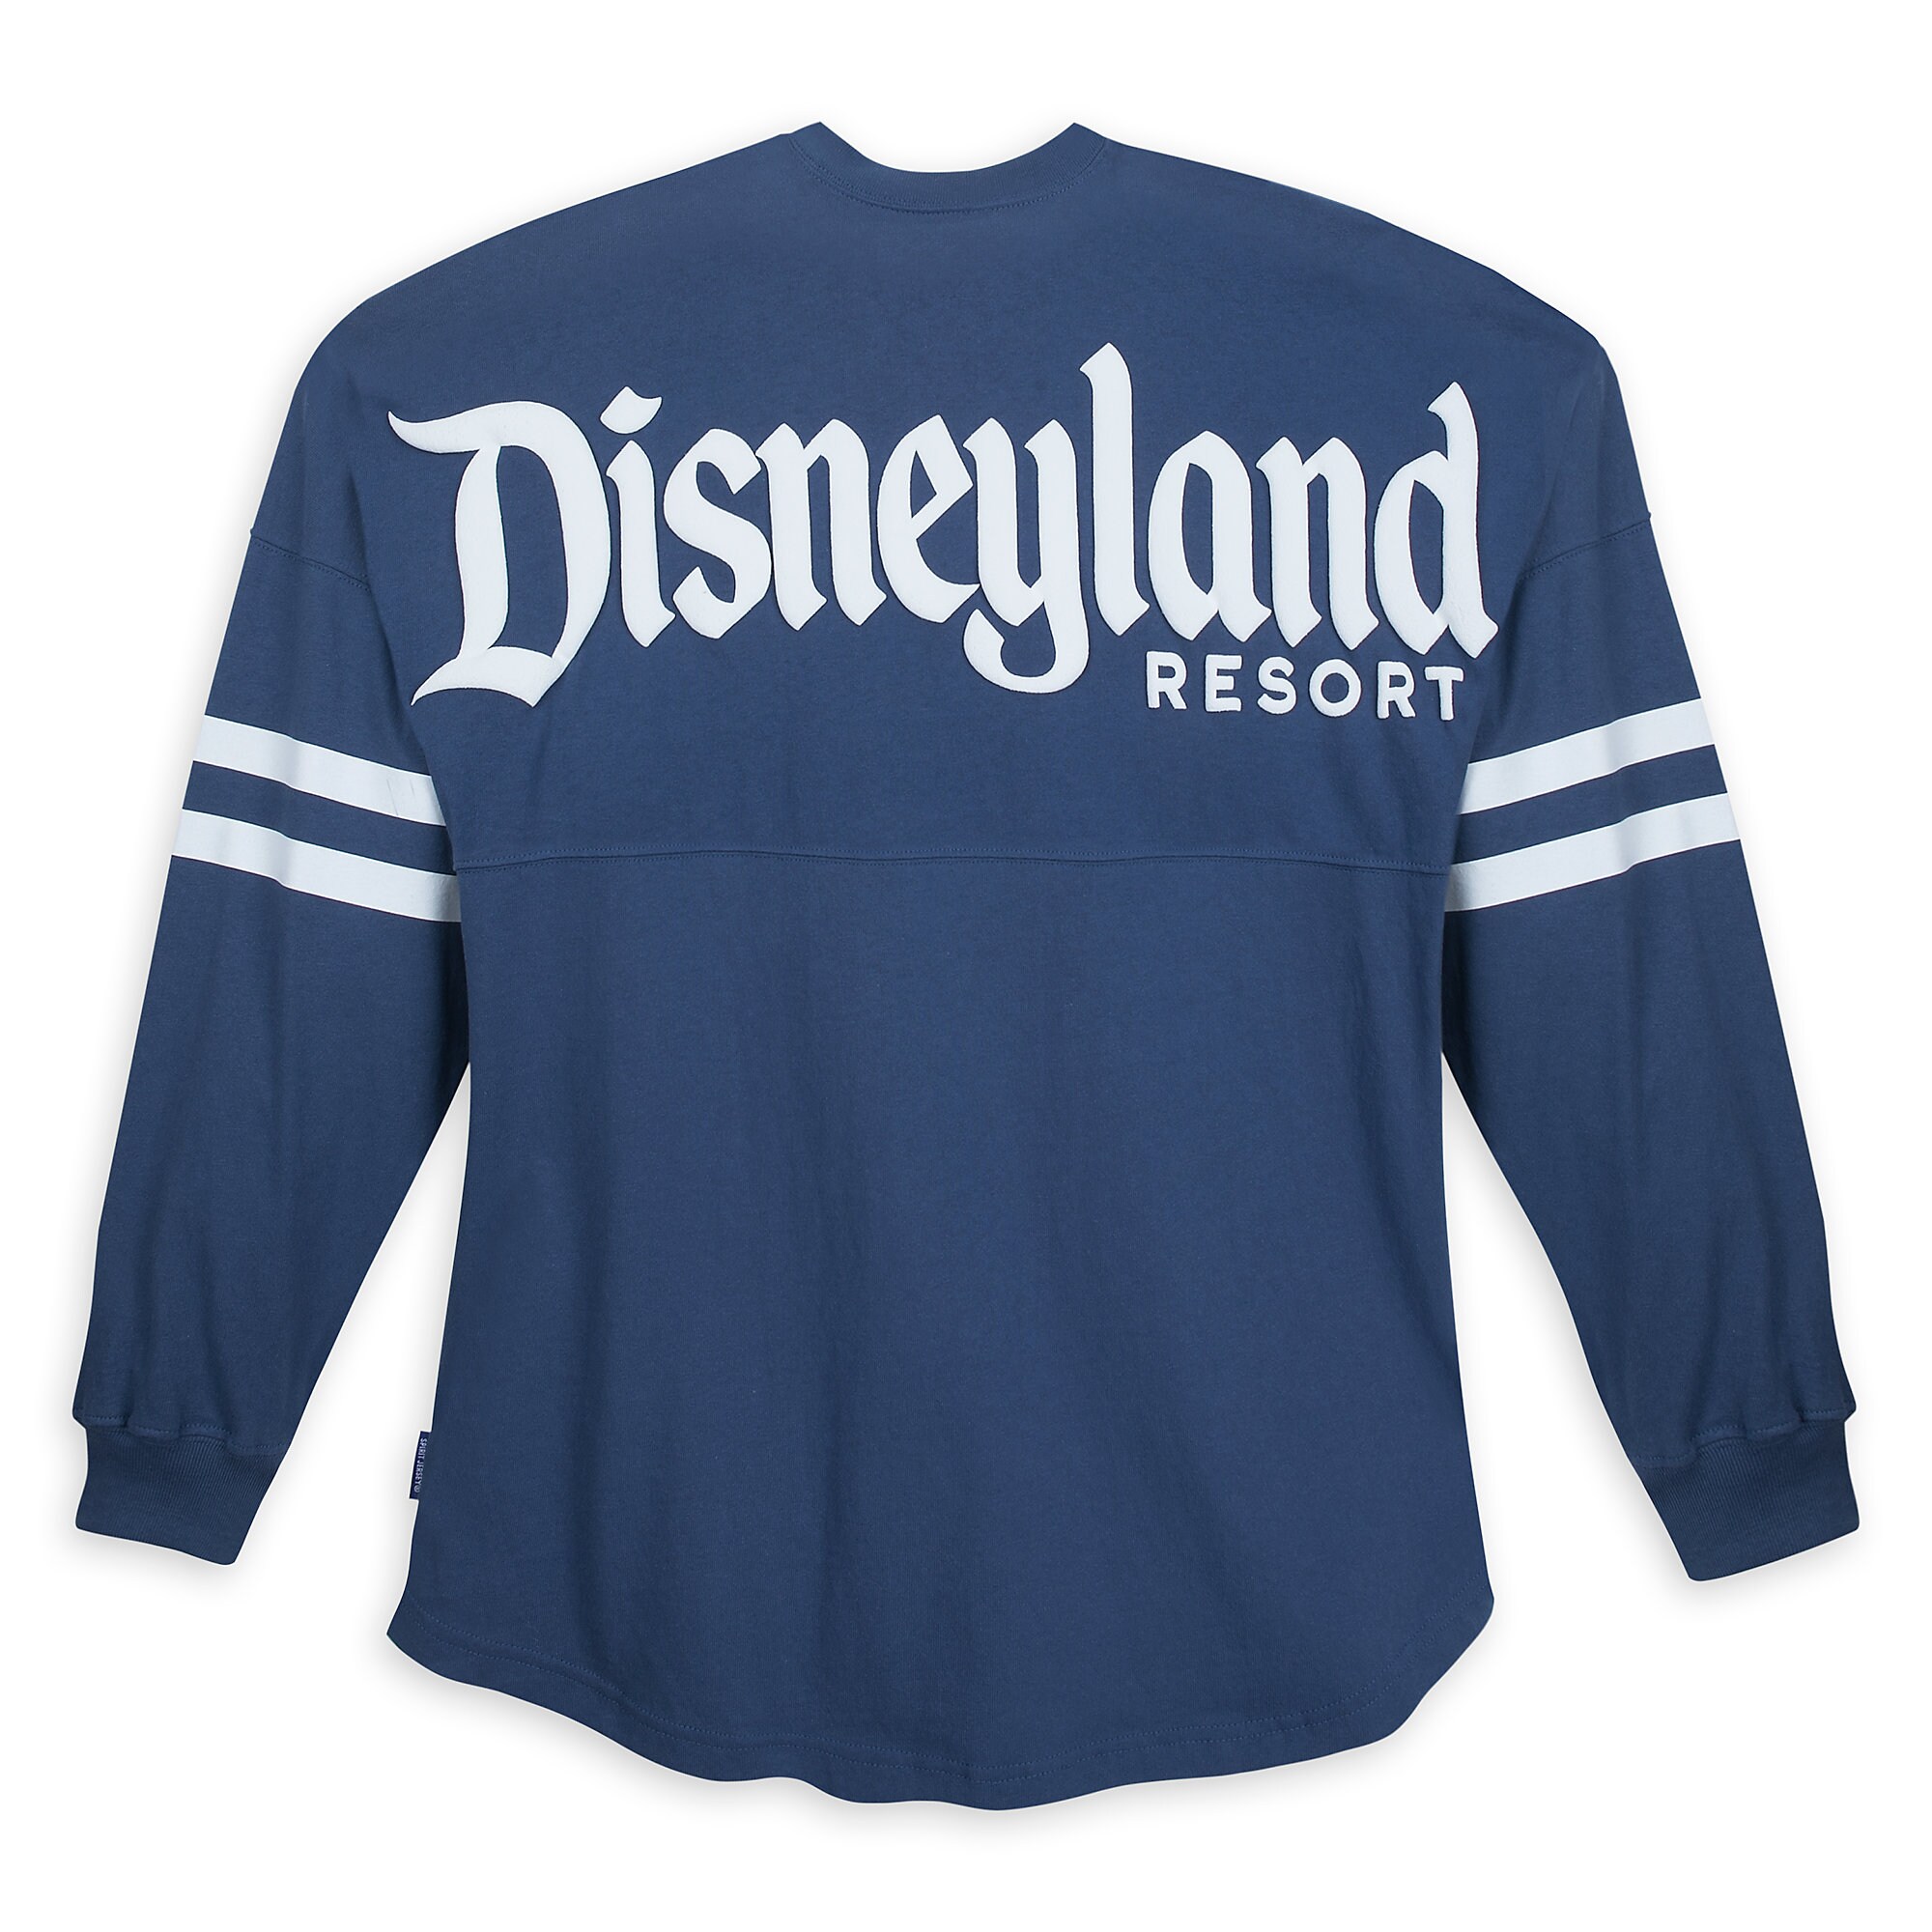 Disneyland Resort Spirit Jersey for Adults - Moonlight Blue